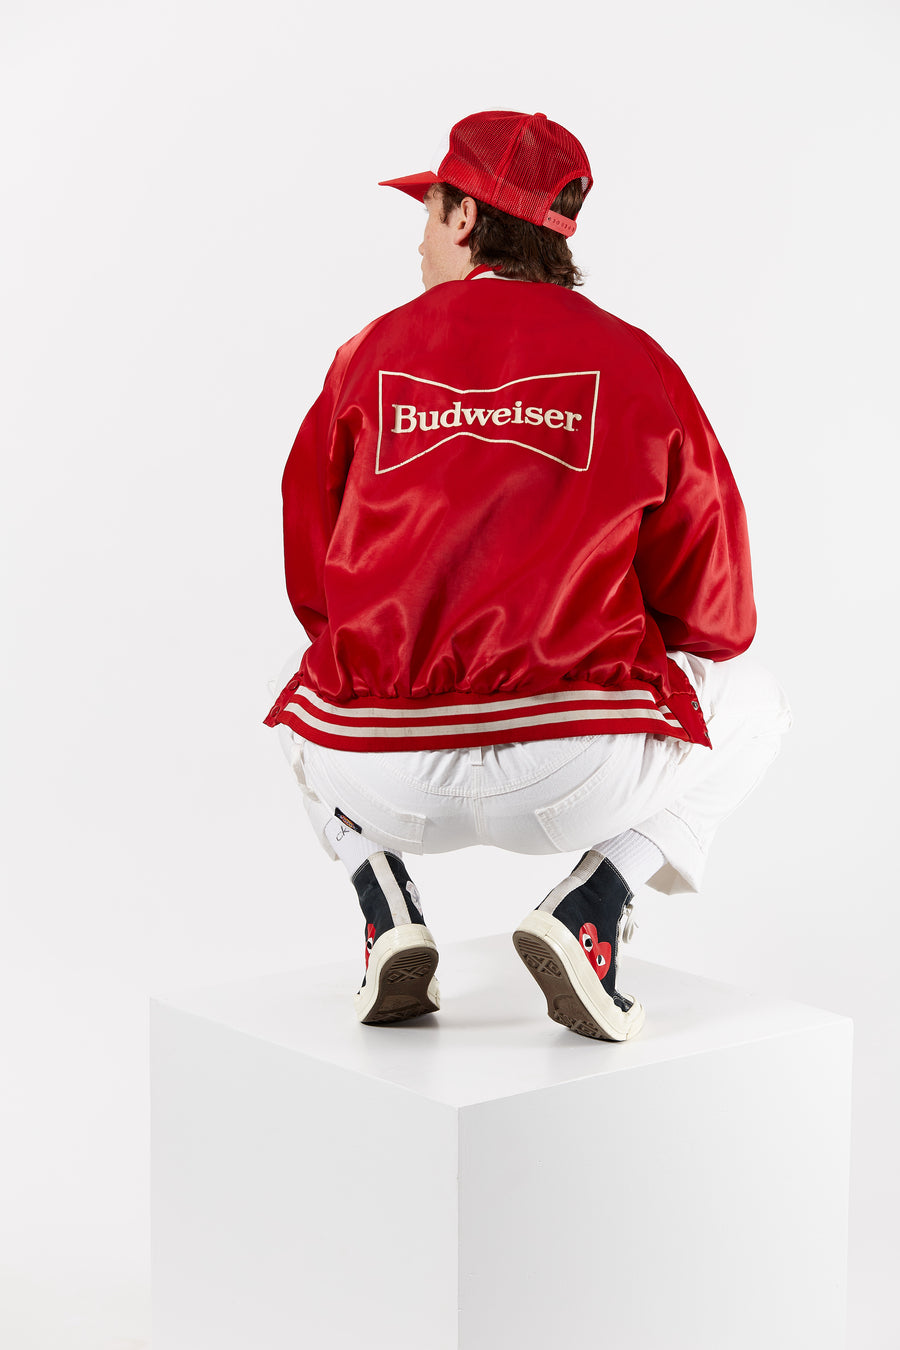 Budweiser Red Satin Bomber Jacket by Anheuser Busch